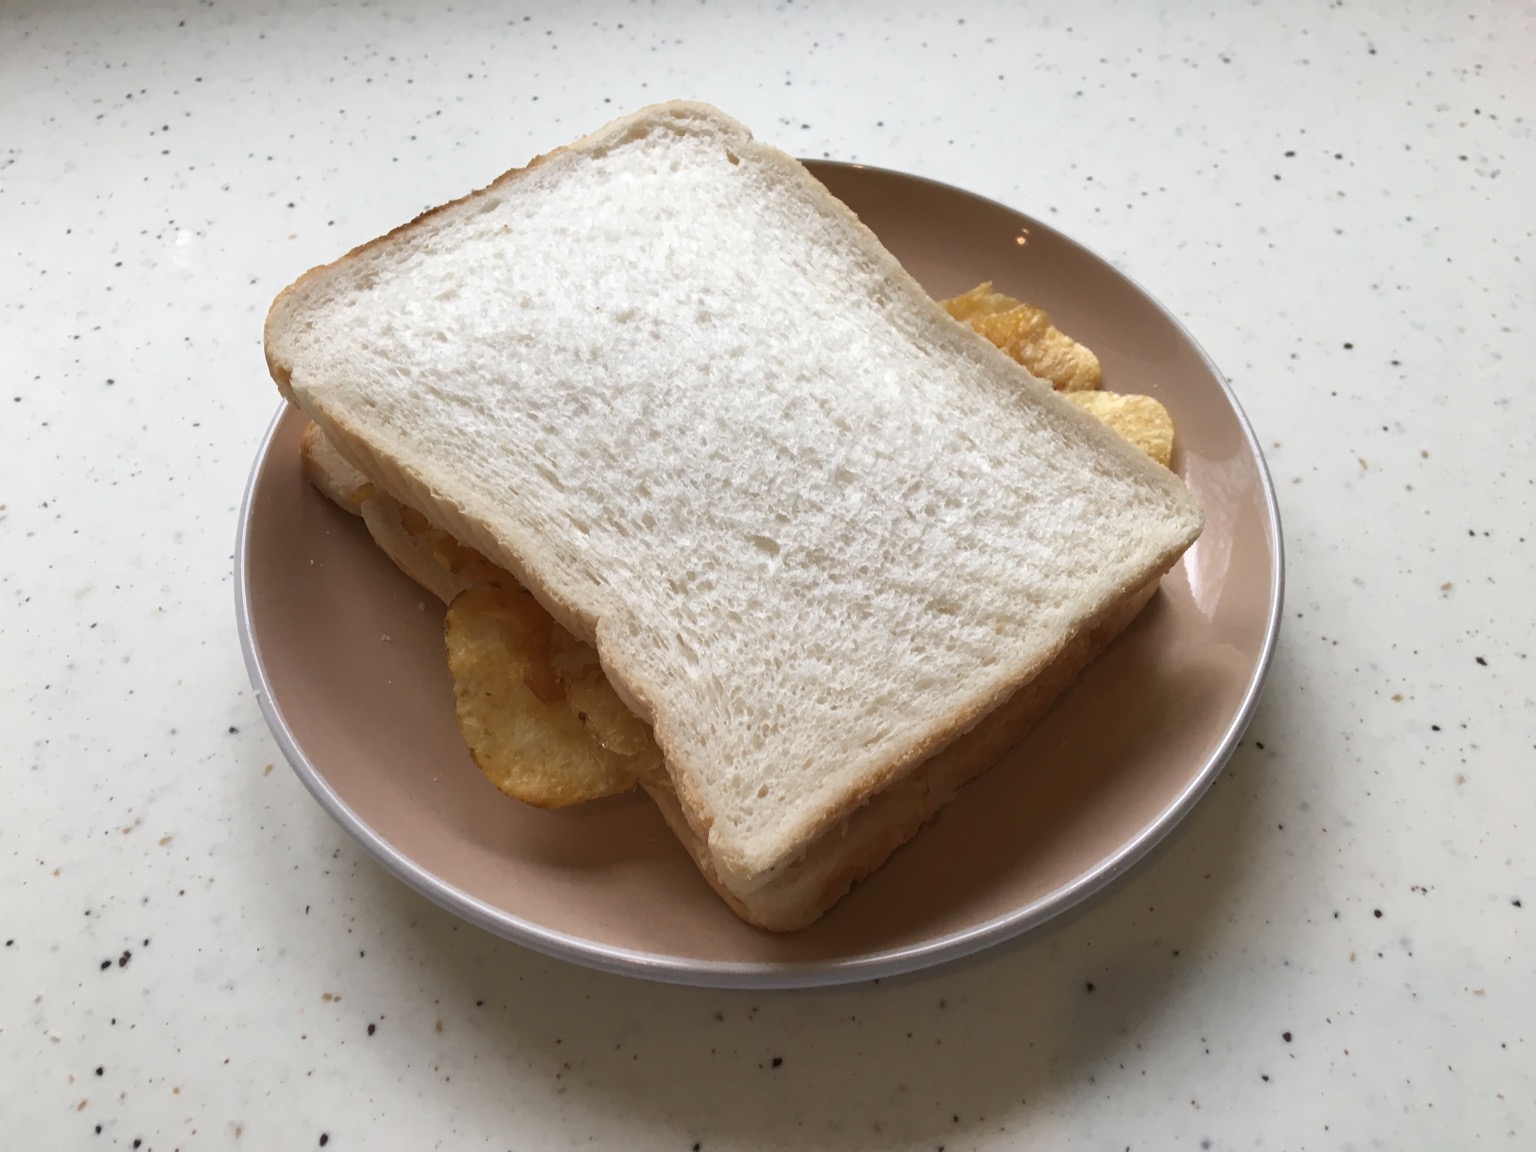 Two slices of white bread containing potato crisps